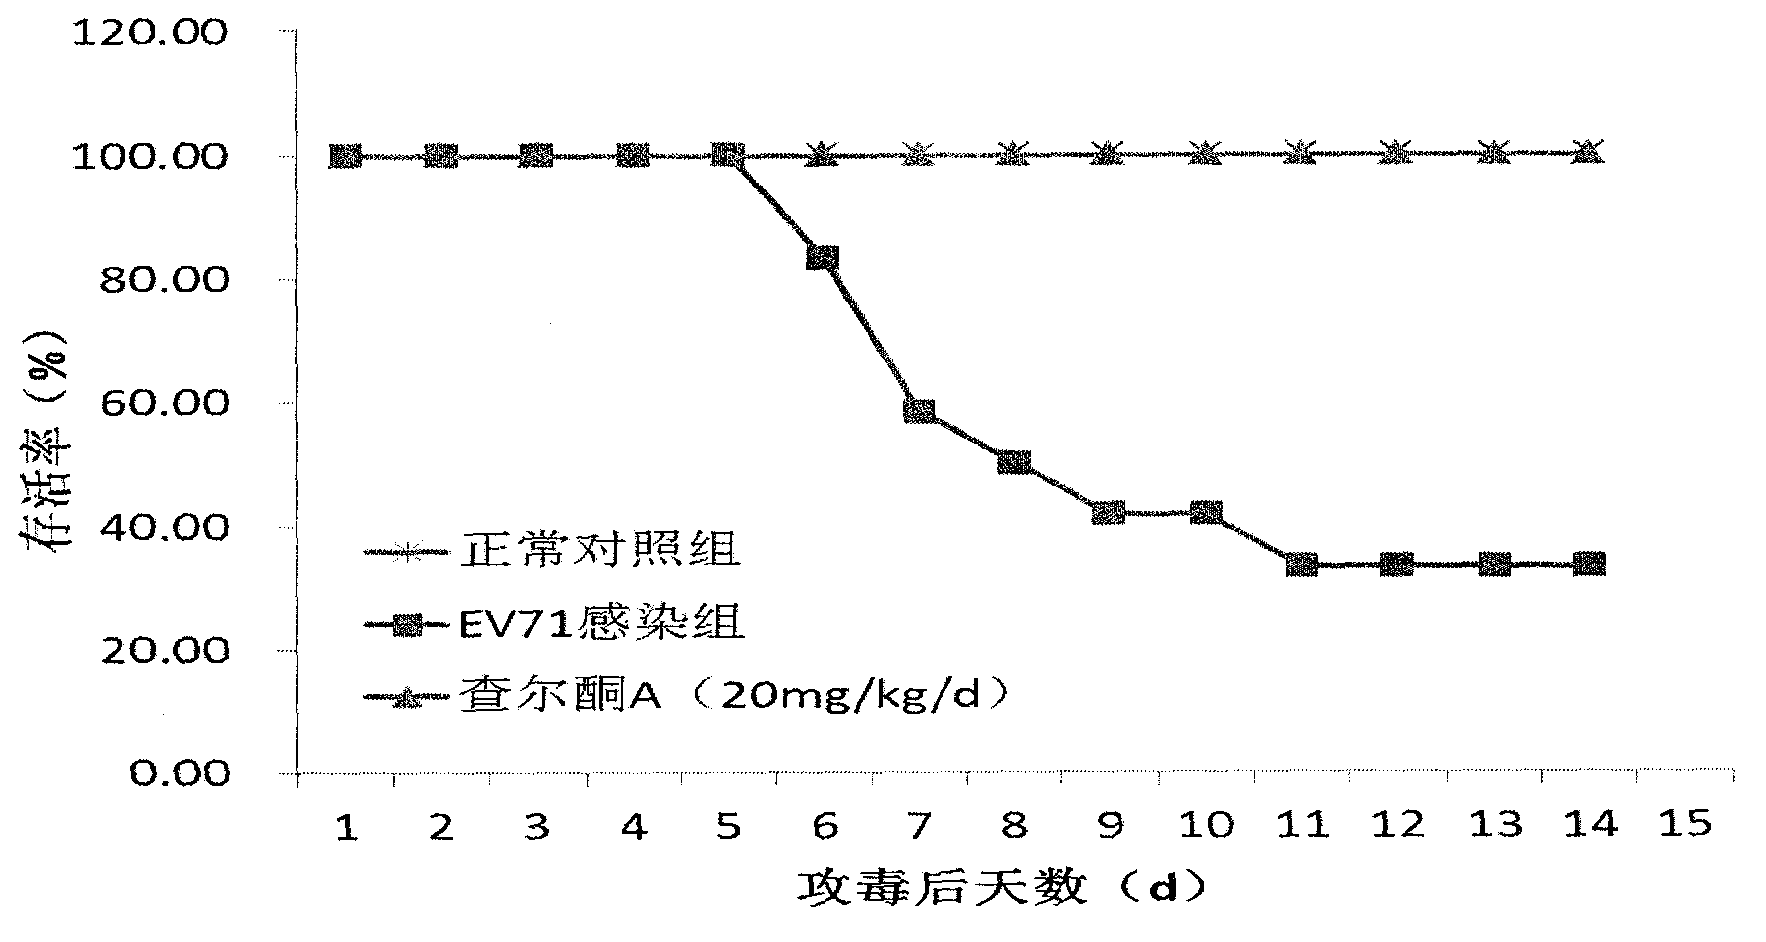 New use of 5-(1,1-dimethylallyl propyl)-4,4'-dihydroxyl-2-methoxyl chalcone